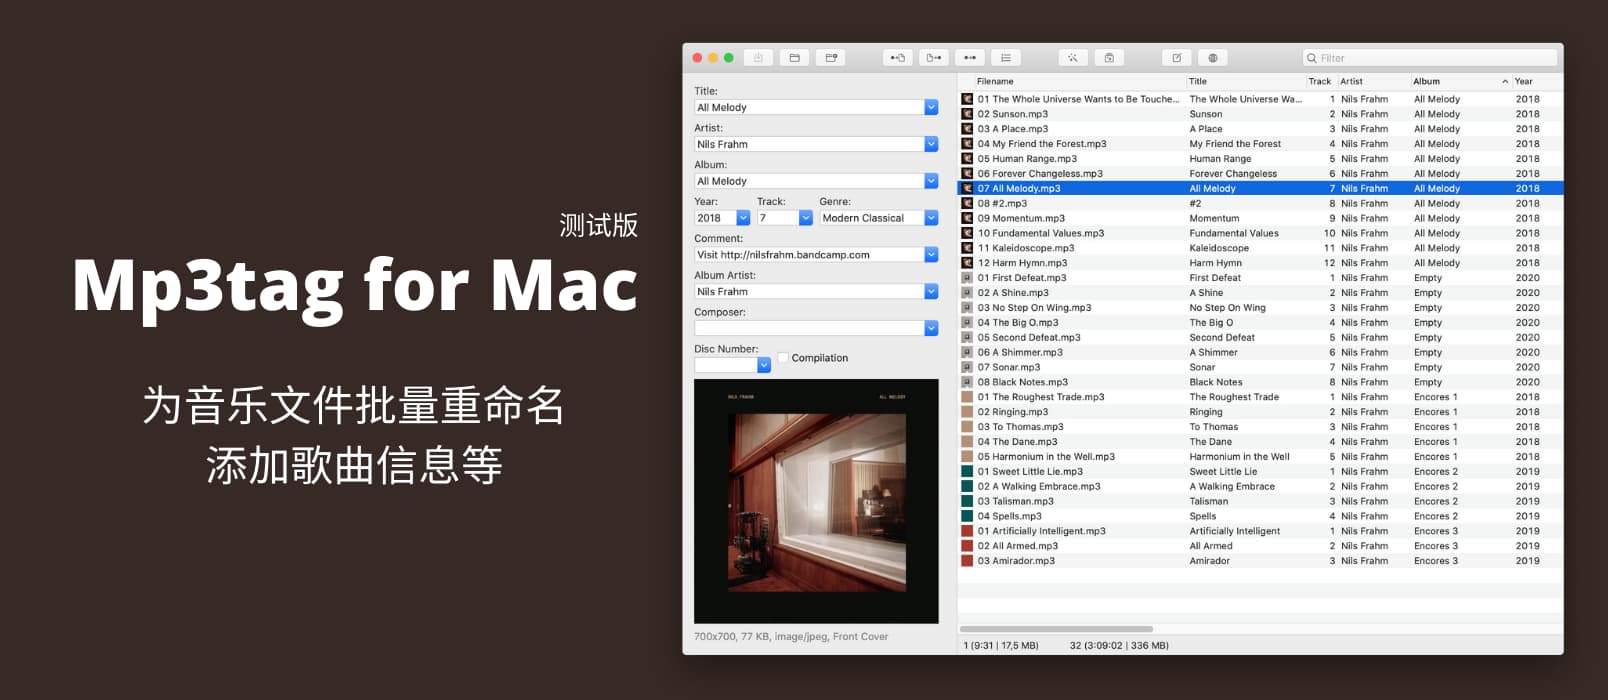 Mp3tag for Mac 测试版发布，为 mp3 文件批量重命名、添加歌曲信息等